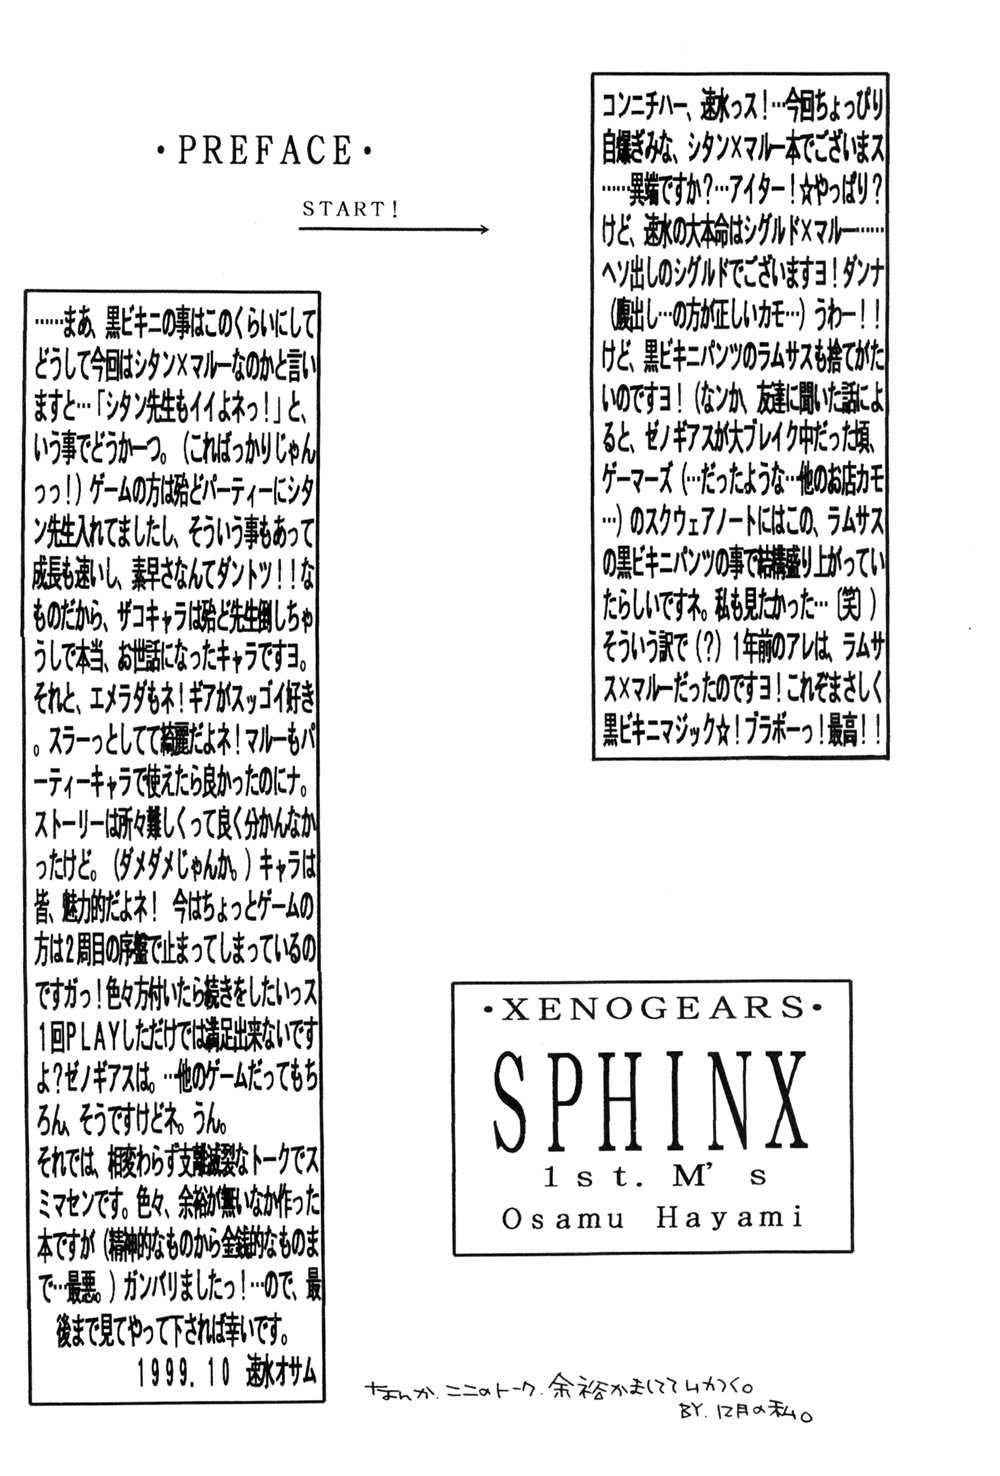 [1st. M&#039;s] Sphinx (Xenogears) 